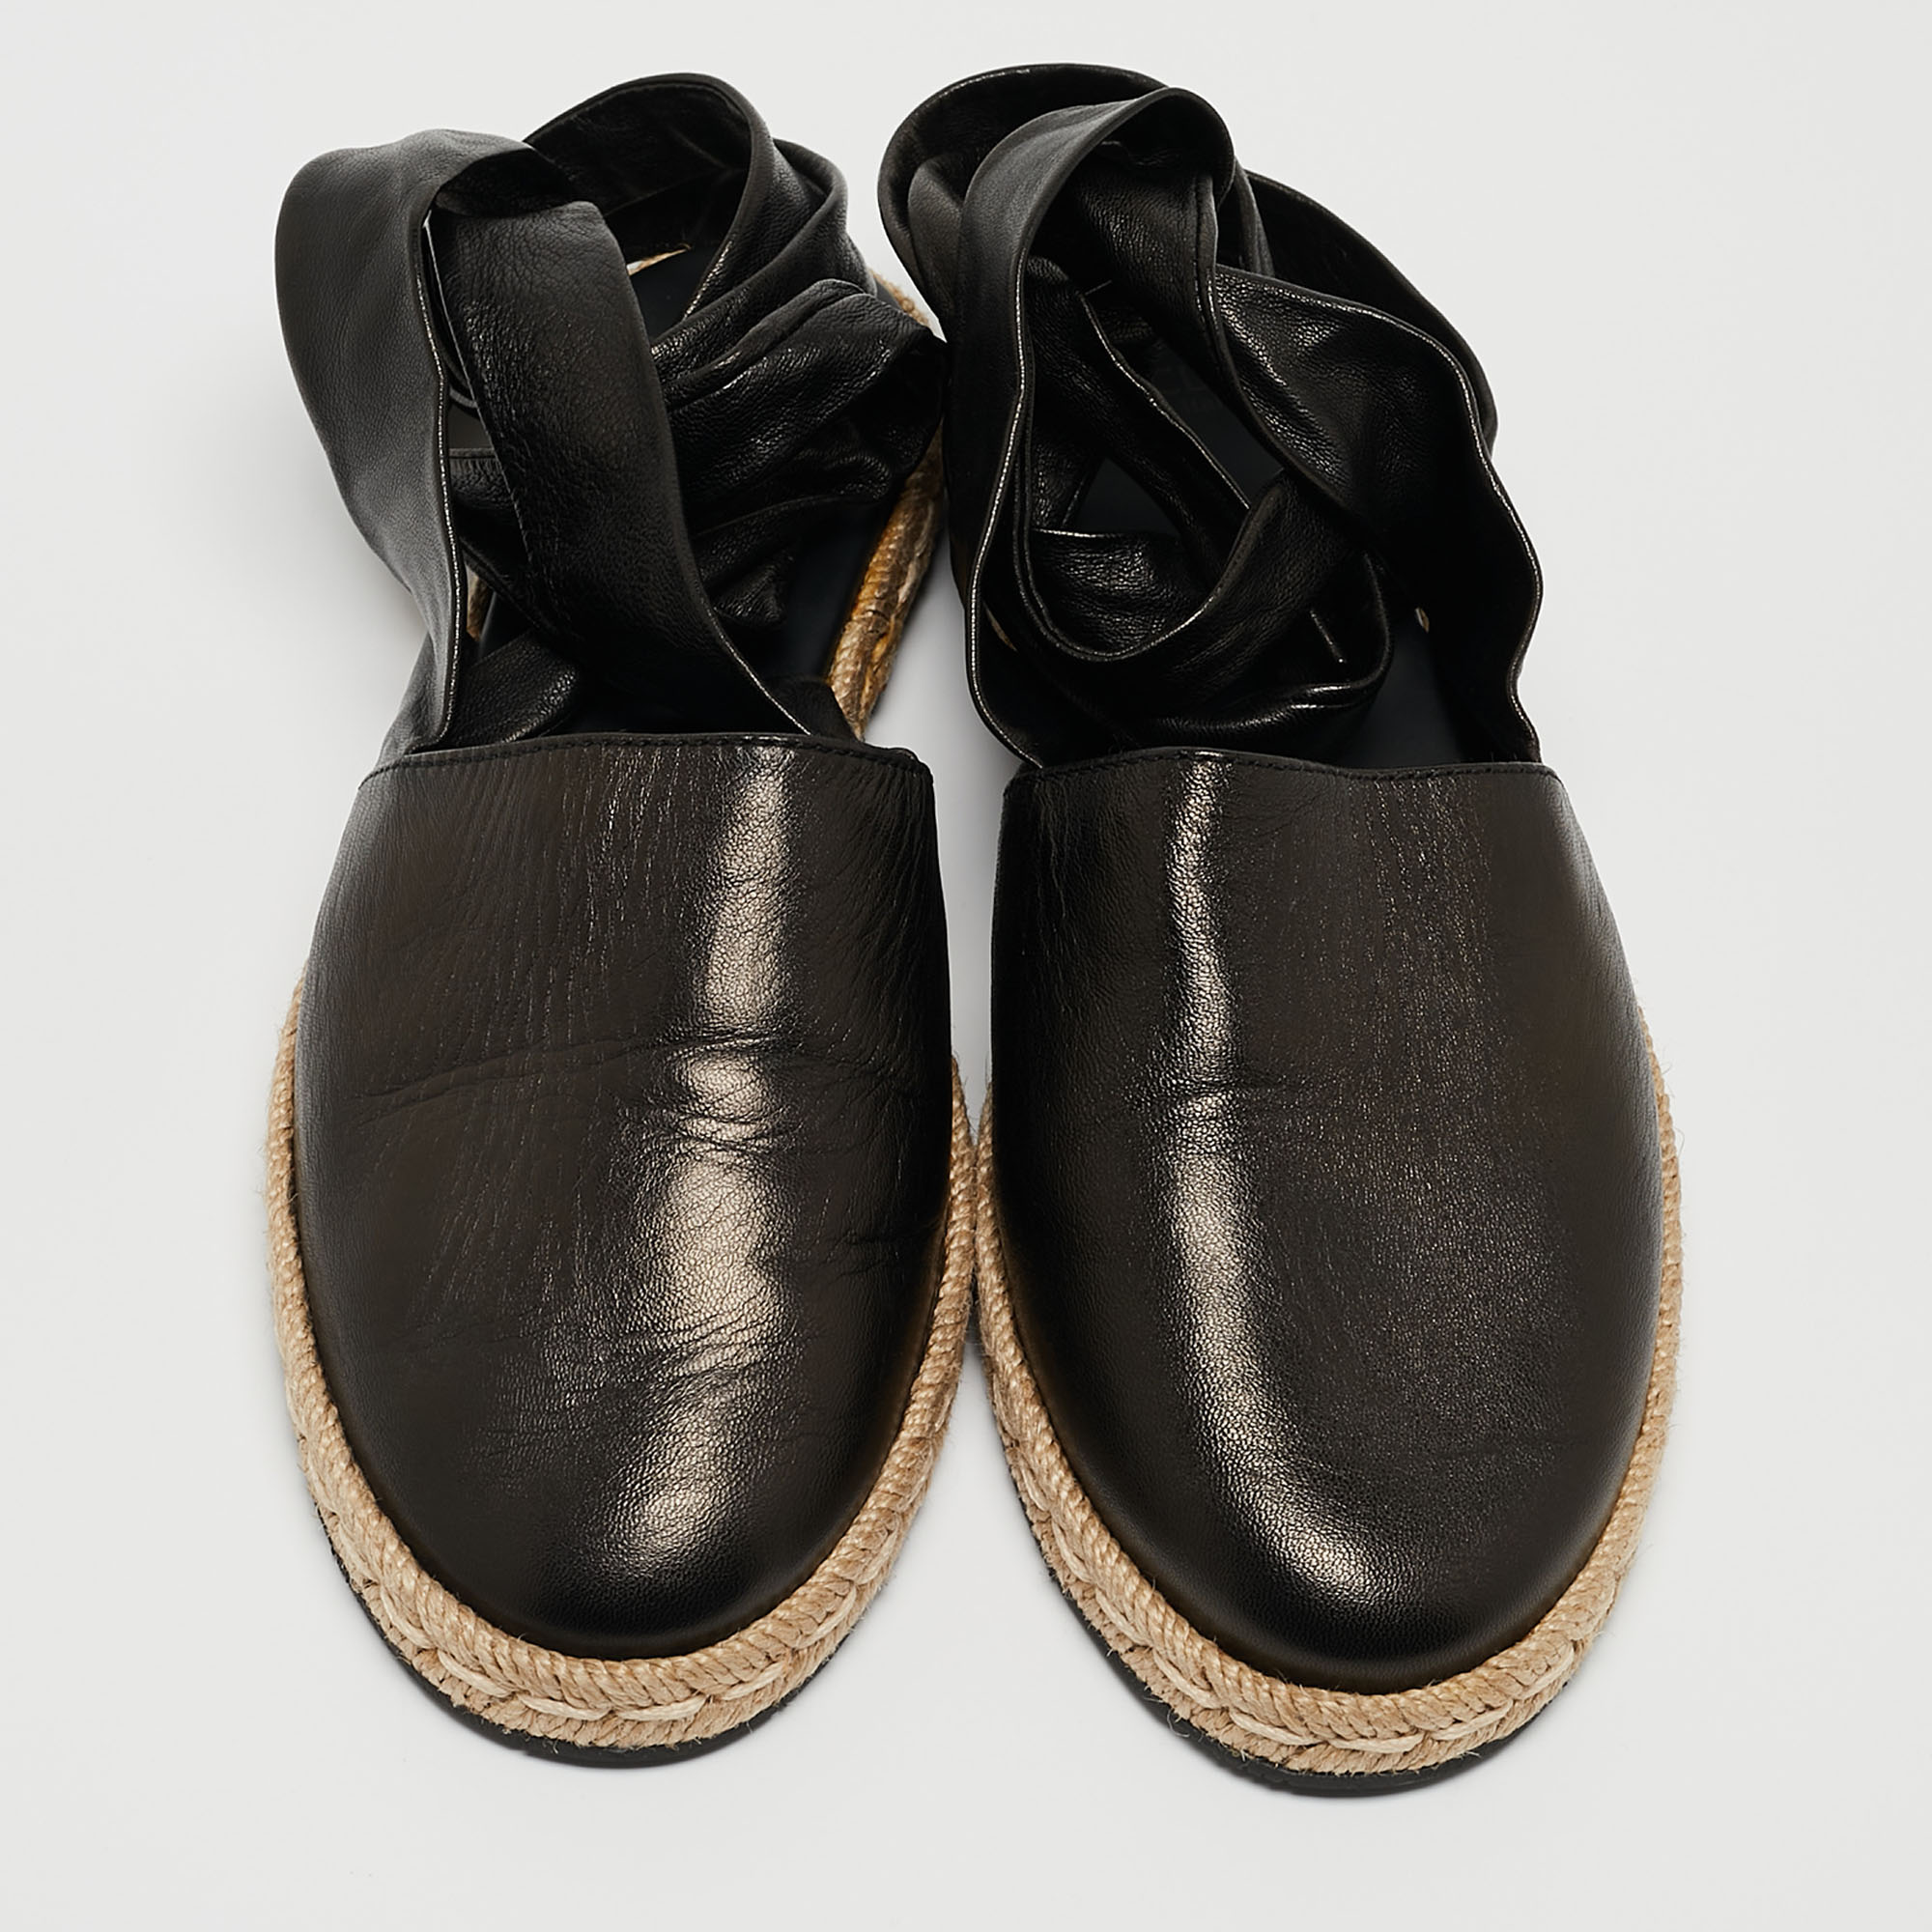 Moncler Black Leather Ankle Tie Espadrille Flats Size 37